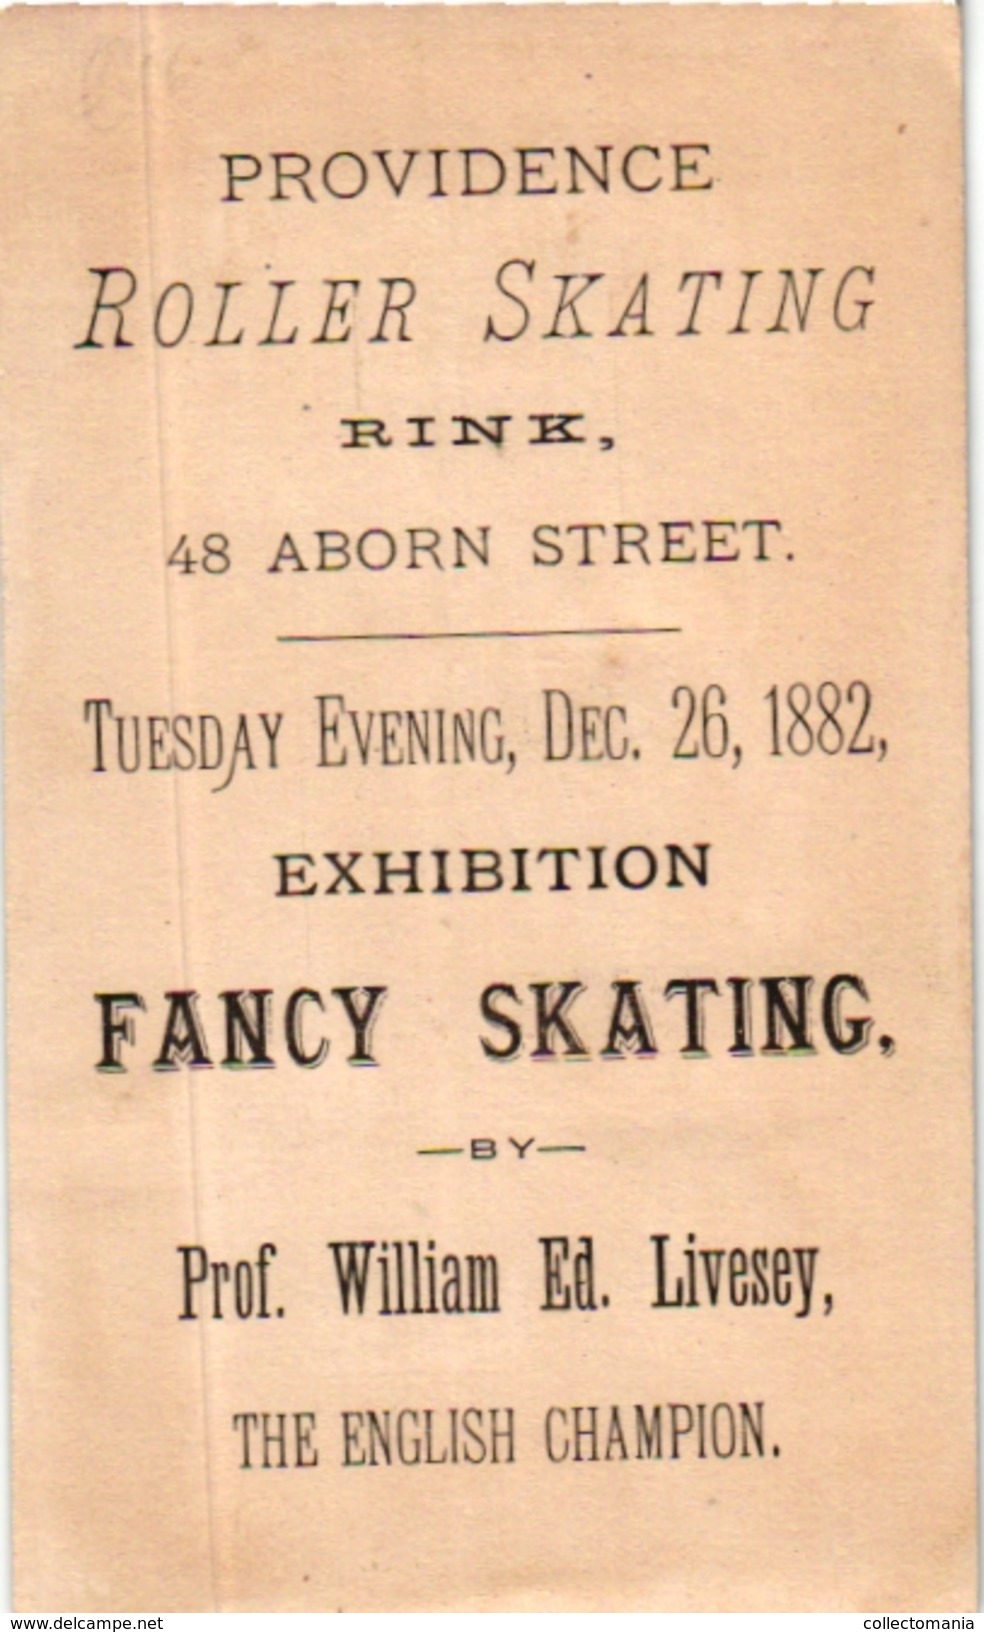 6Trade Cards Chromo Roller Skate Patinage à Roulettes Rollschuh Litho c1900 Pub Reading Soaps Roller skating Rink 1882